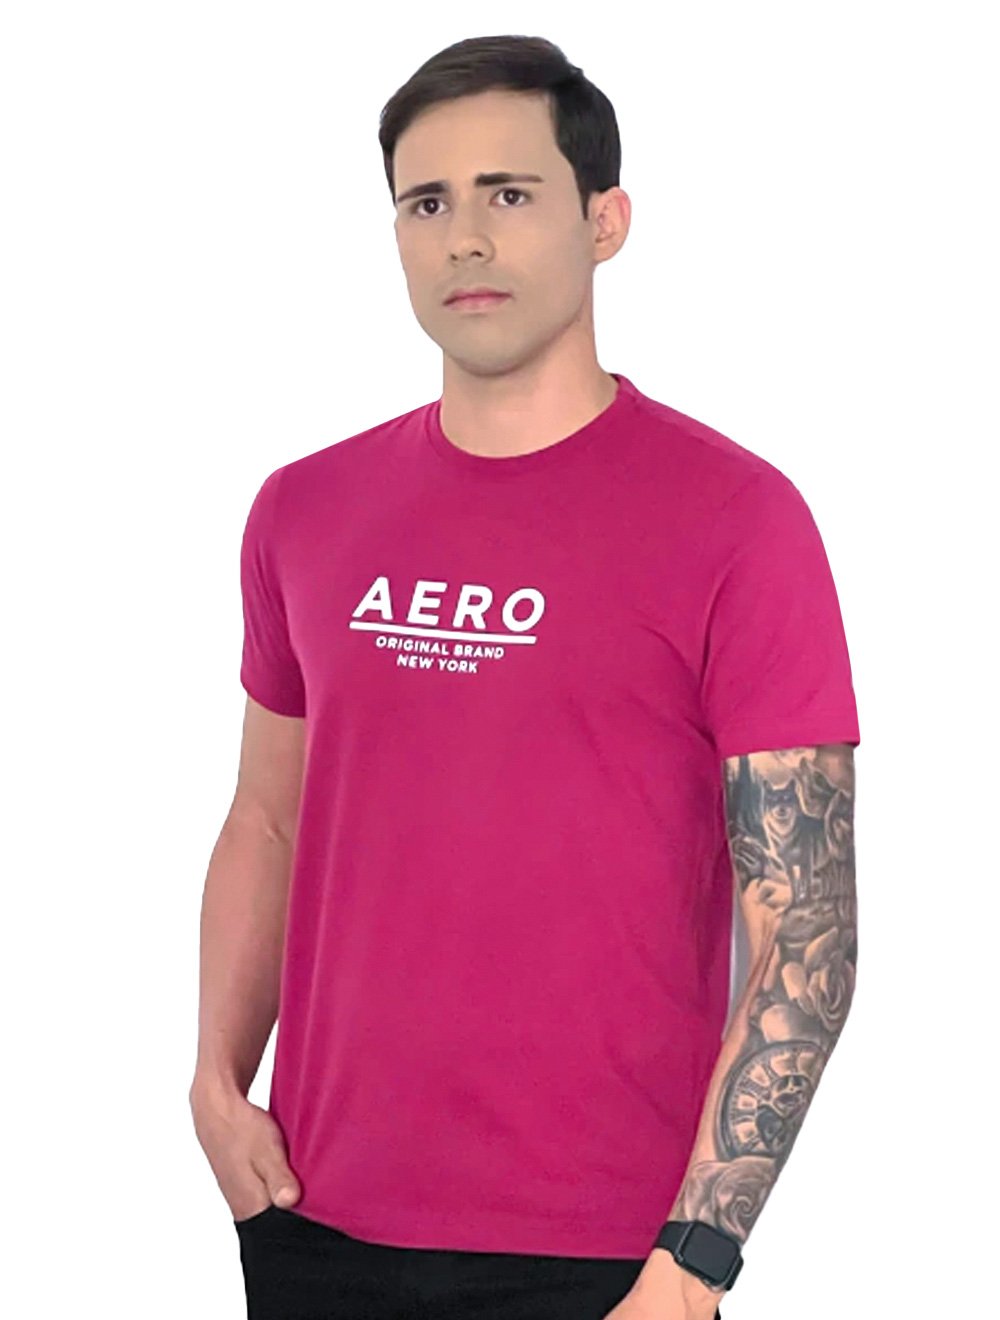 Camiseta Aeropostale Masculina Aero Original Brand New York Bordô